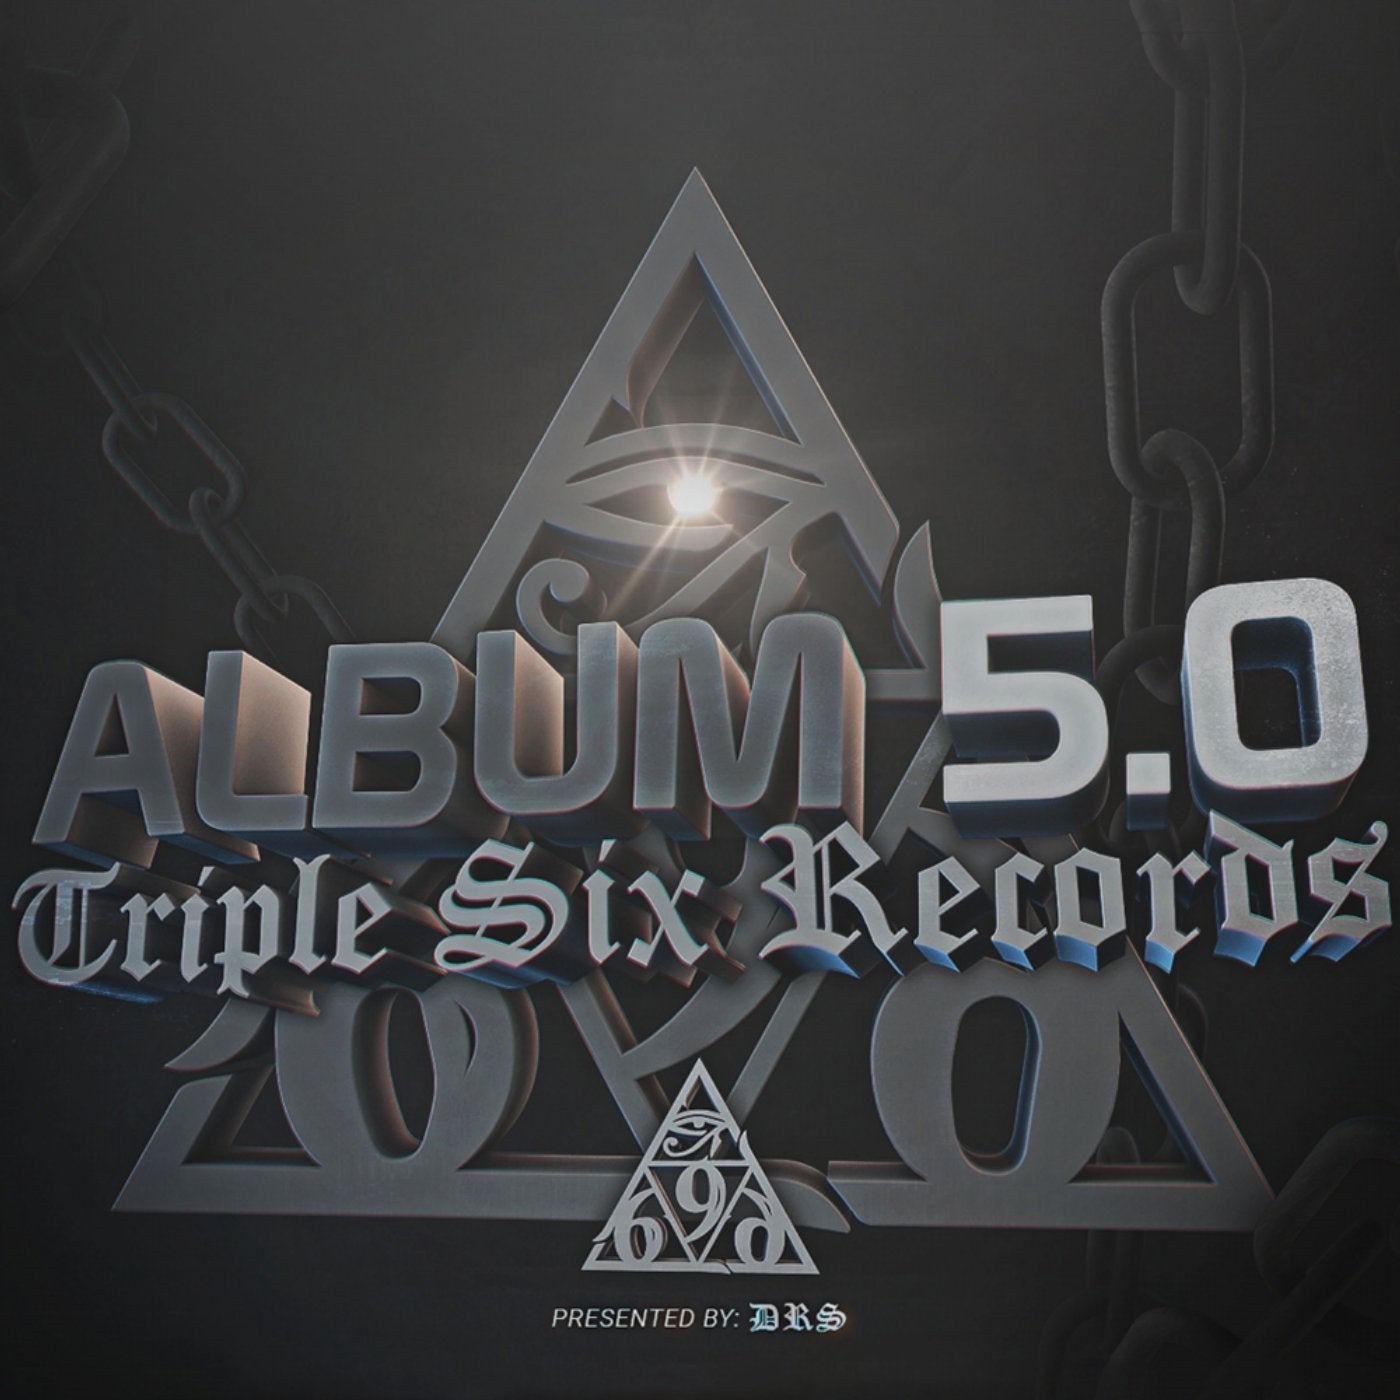 Album 5.0 Triple Six Records